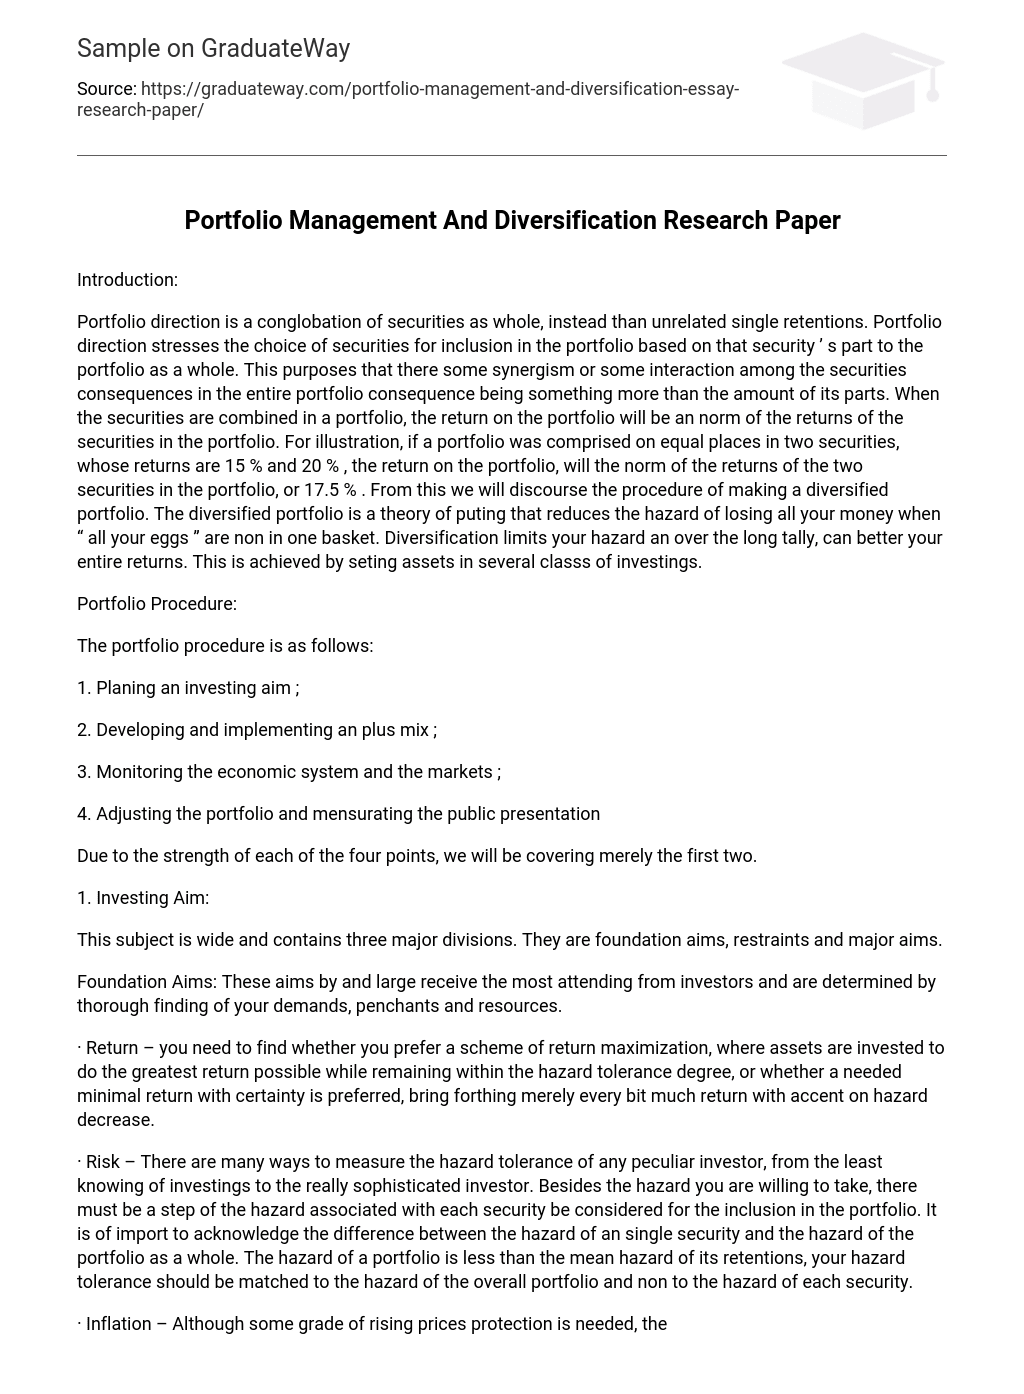 Portfolio Management And Diversification Research Paper